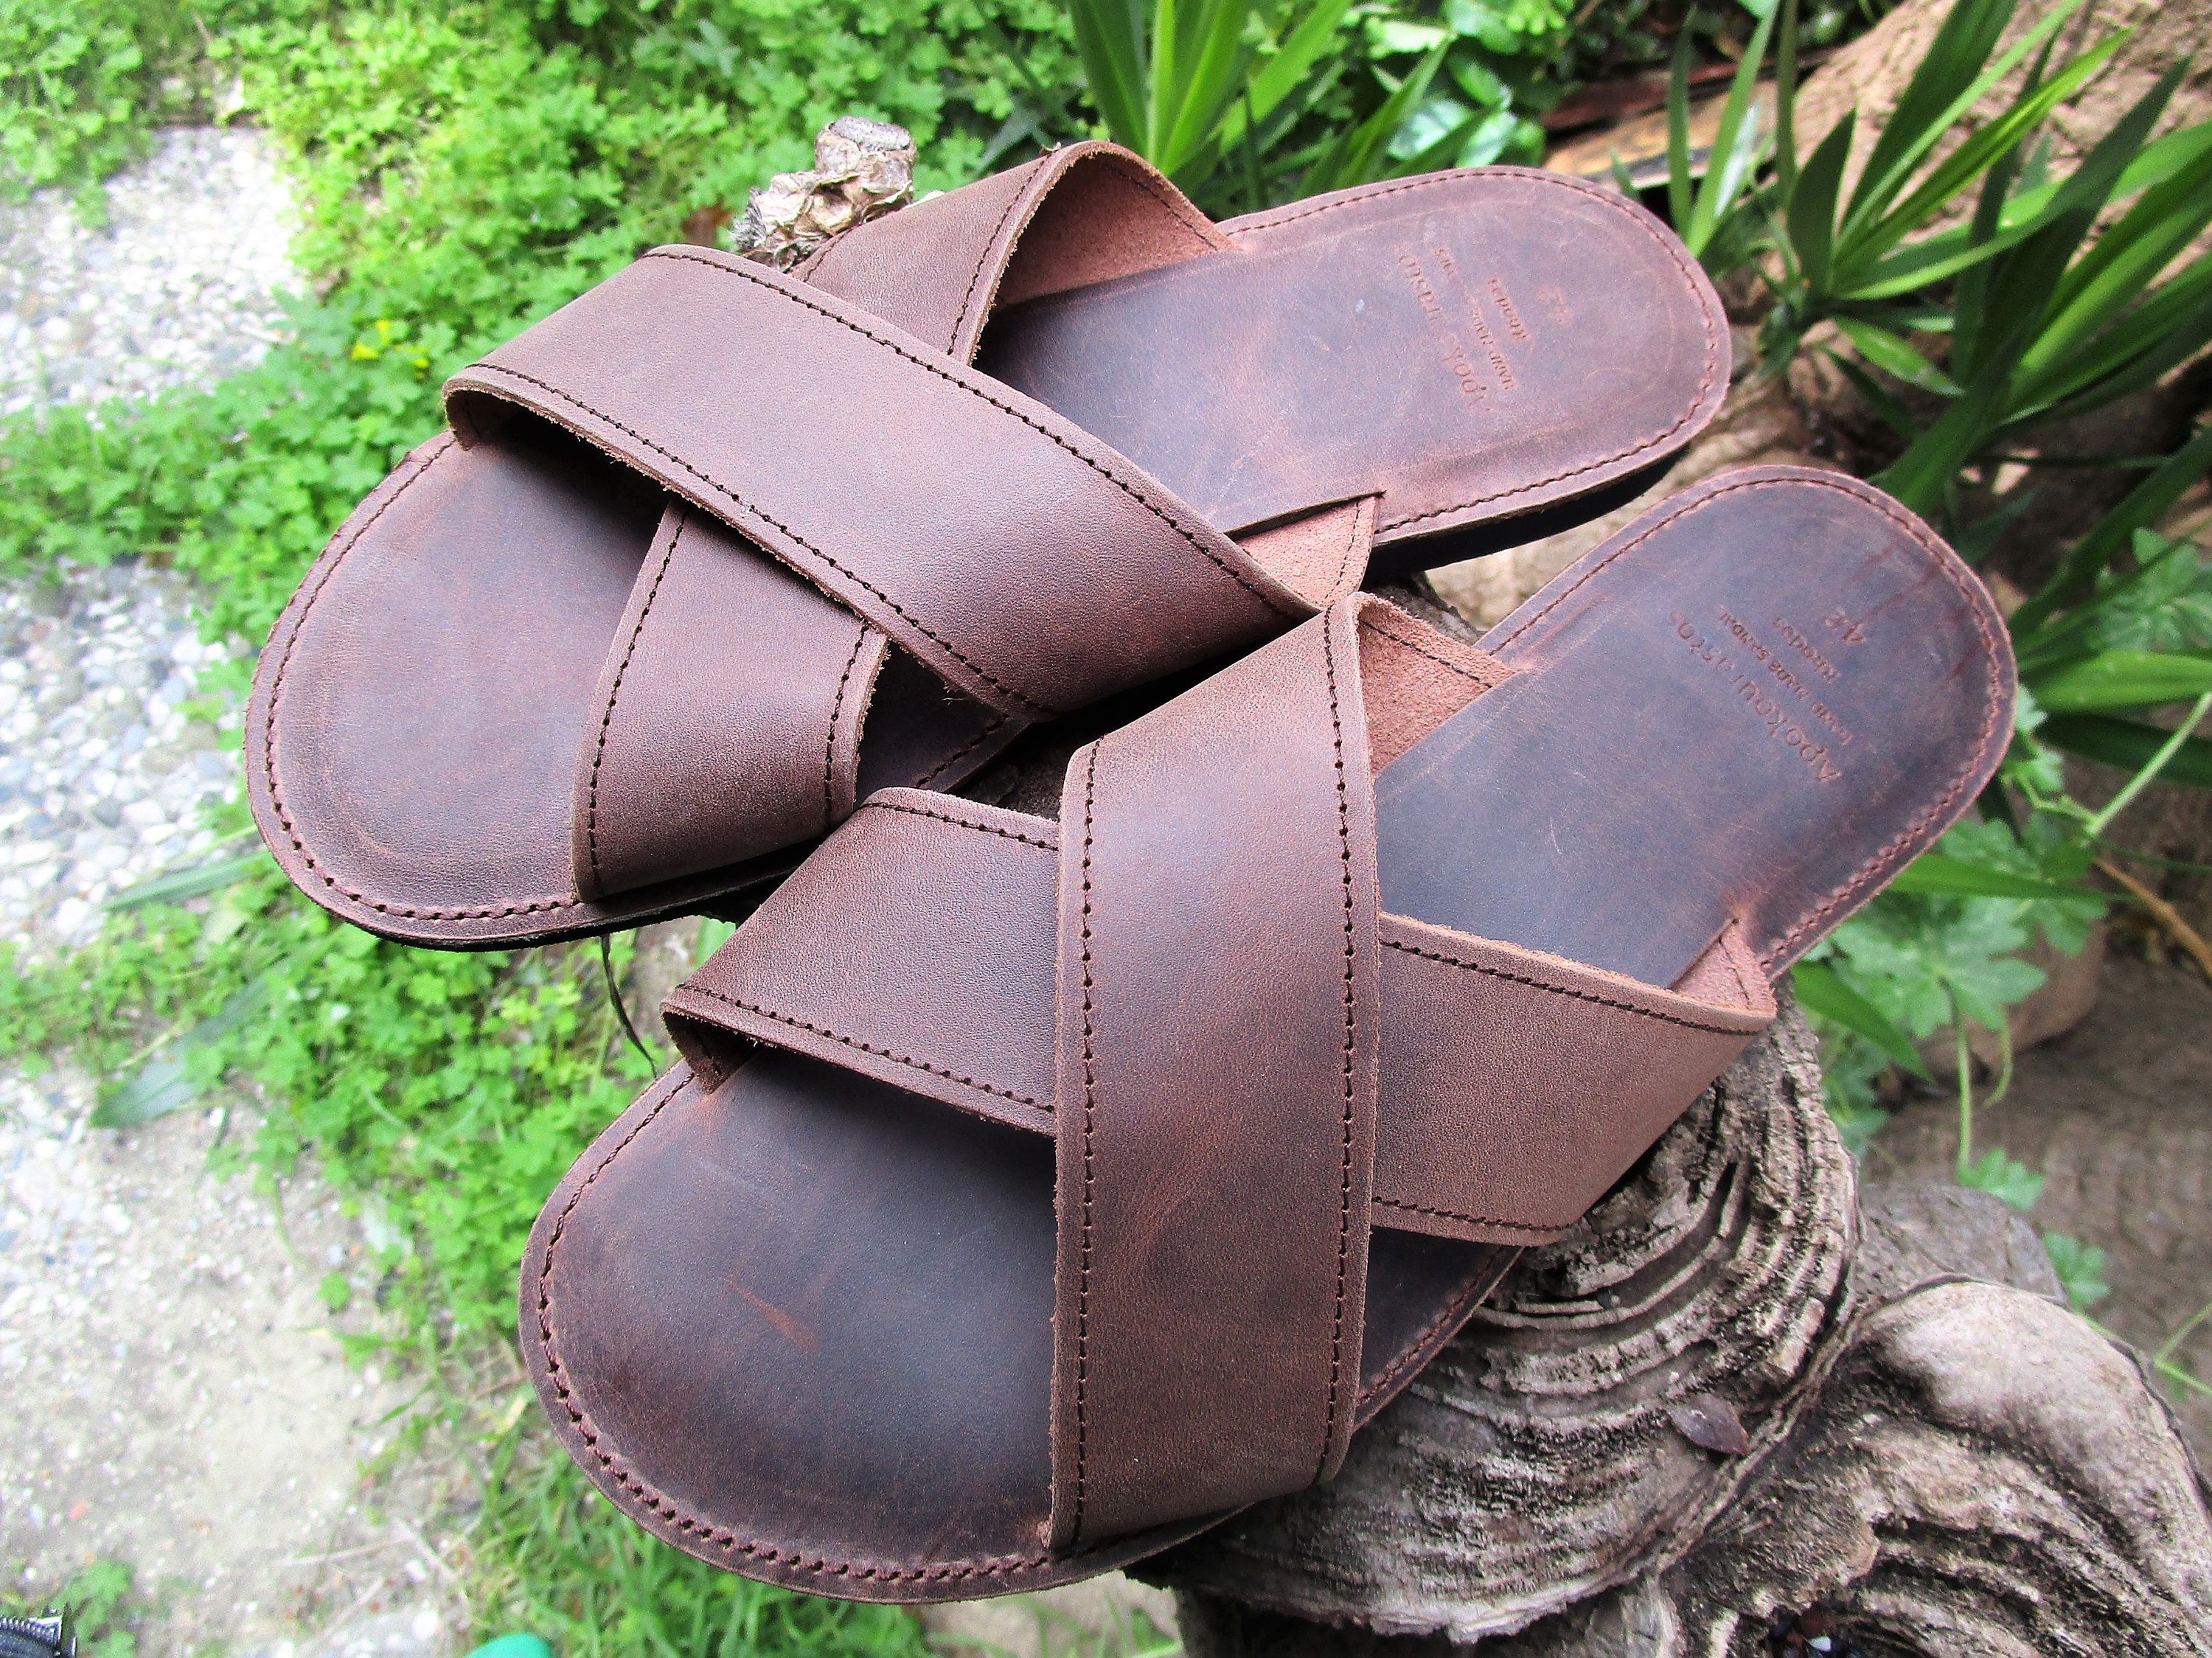 Leather Sandals for Men - Buy Men's Leather Sandals Online | Myntra